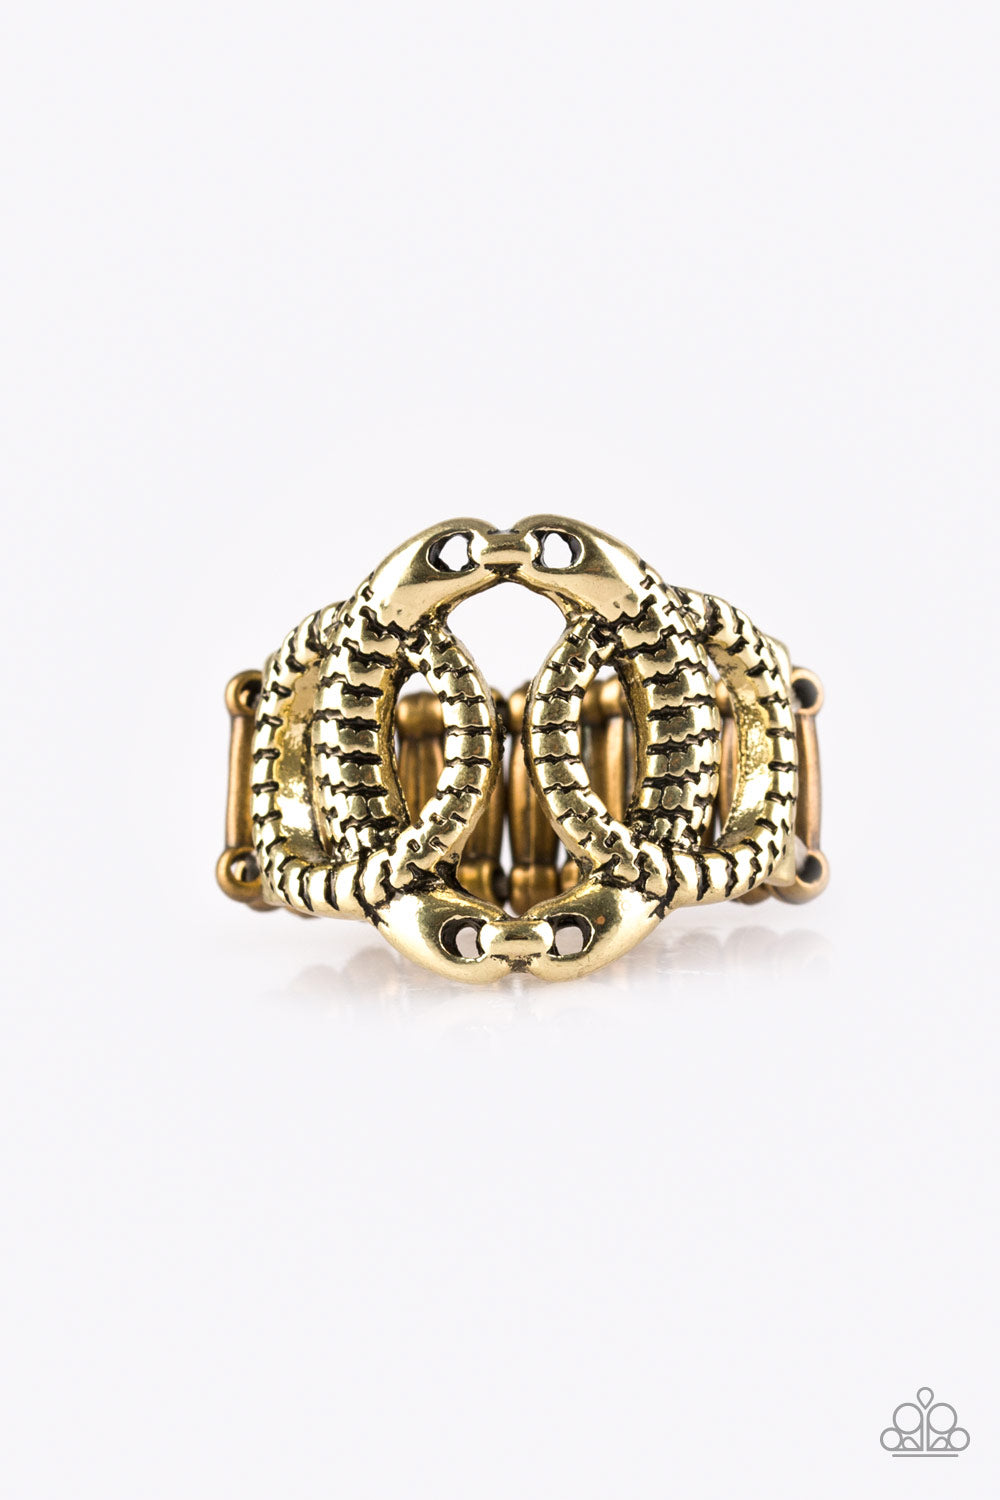 TRIO de Janeiro - Brass Ring Paparazzi Accessories - Susan's Jewelry Shop